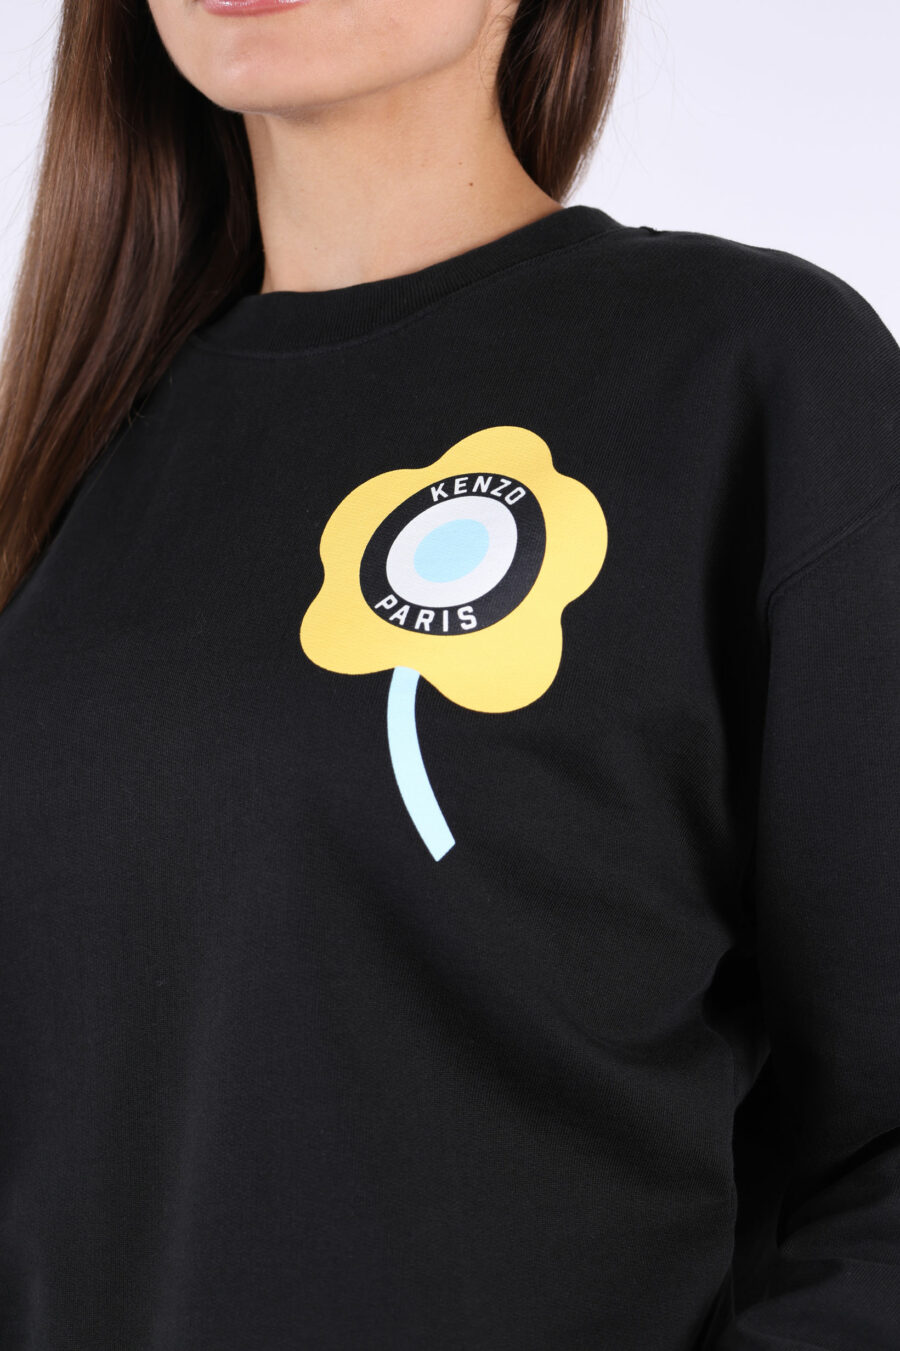 Schwarzes Sweatshirt mit gelbem "kenzo target" Logo - 361223054662202011